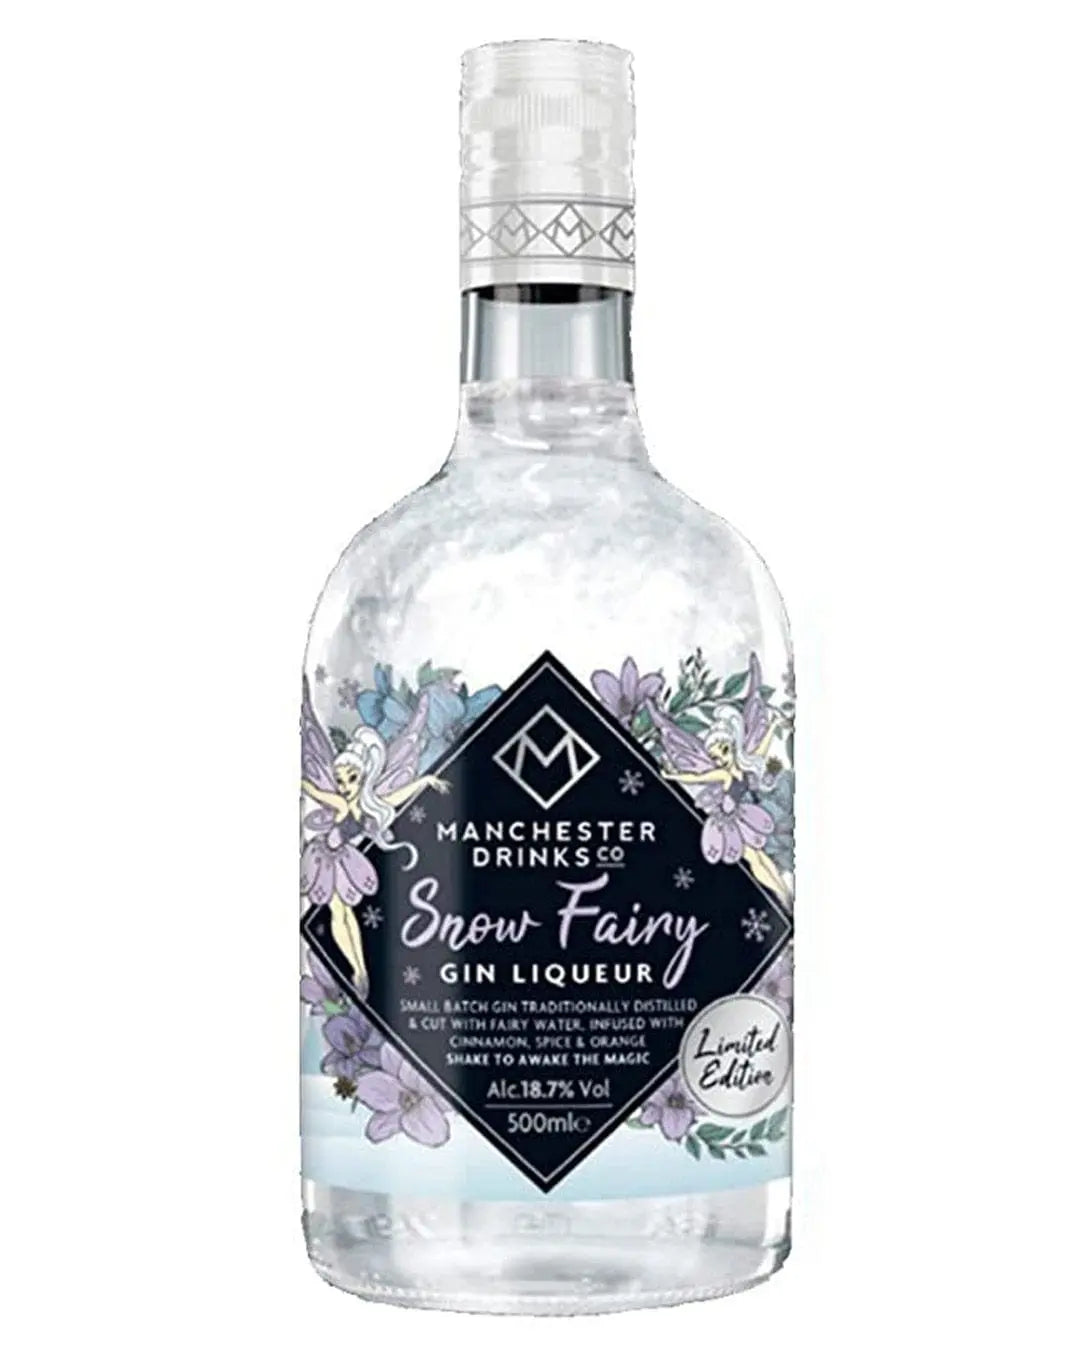 Manchester Drinks Co. Snow Fairy Gin Liqueur, 50 cl Liqueurs & Other Spirits